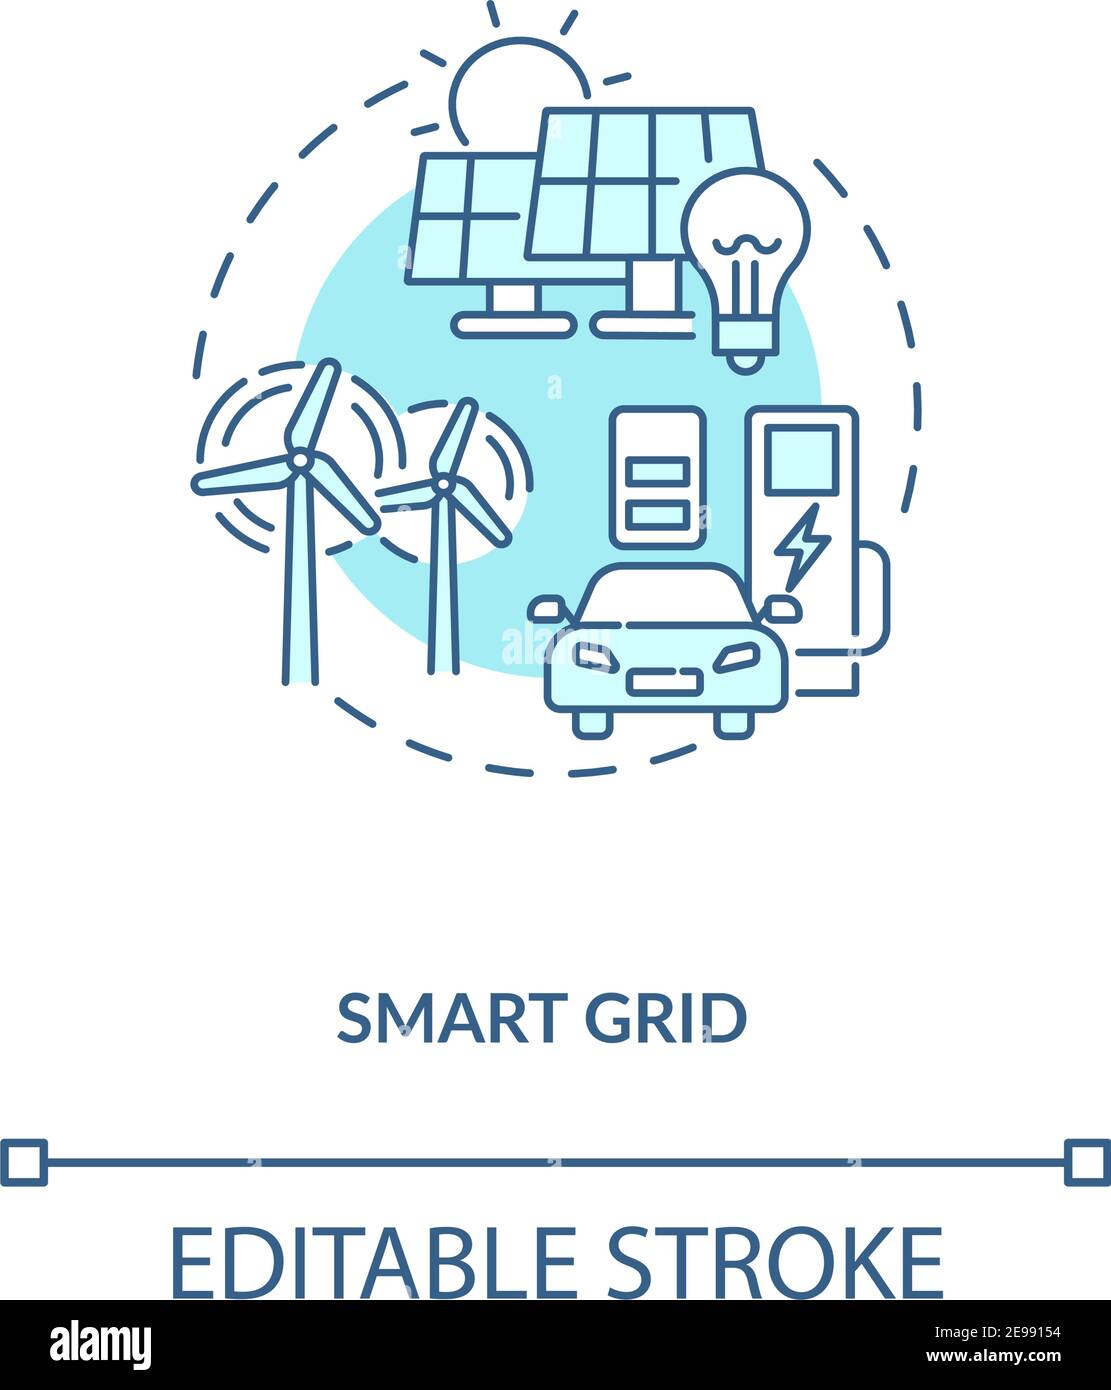 Smart grid concept icon Stock Vector